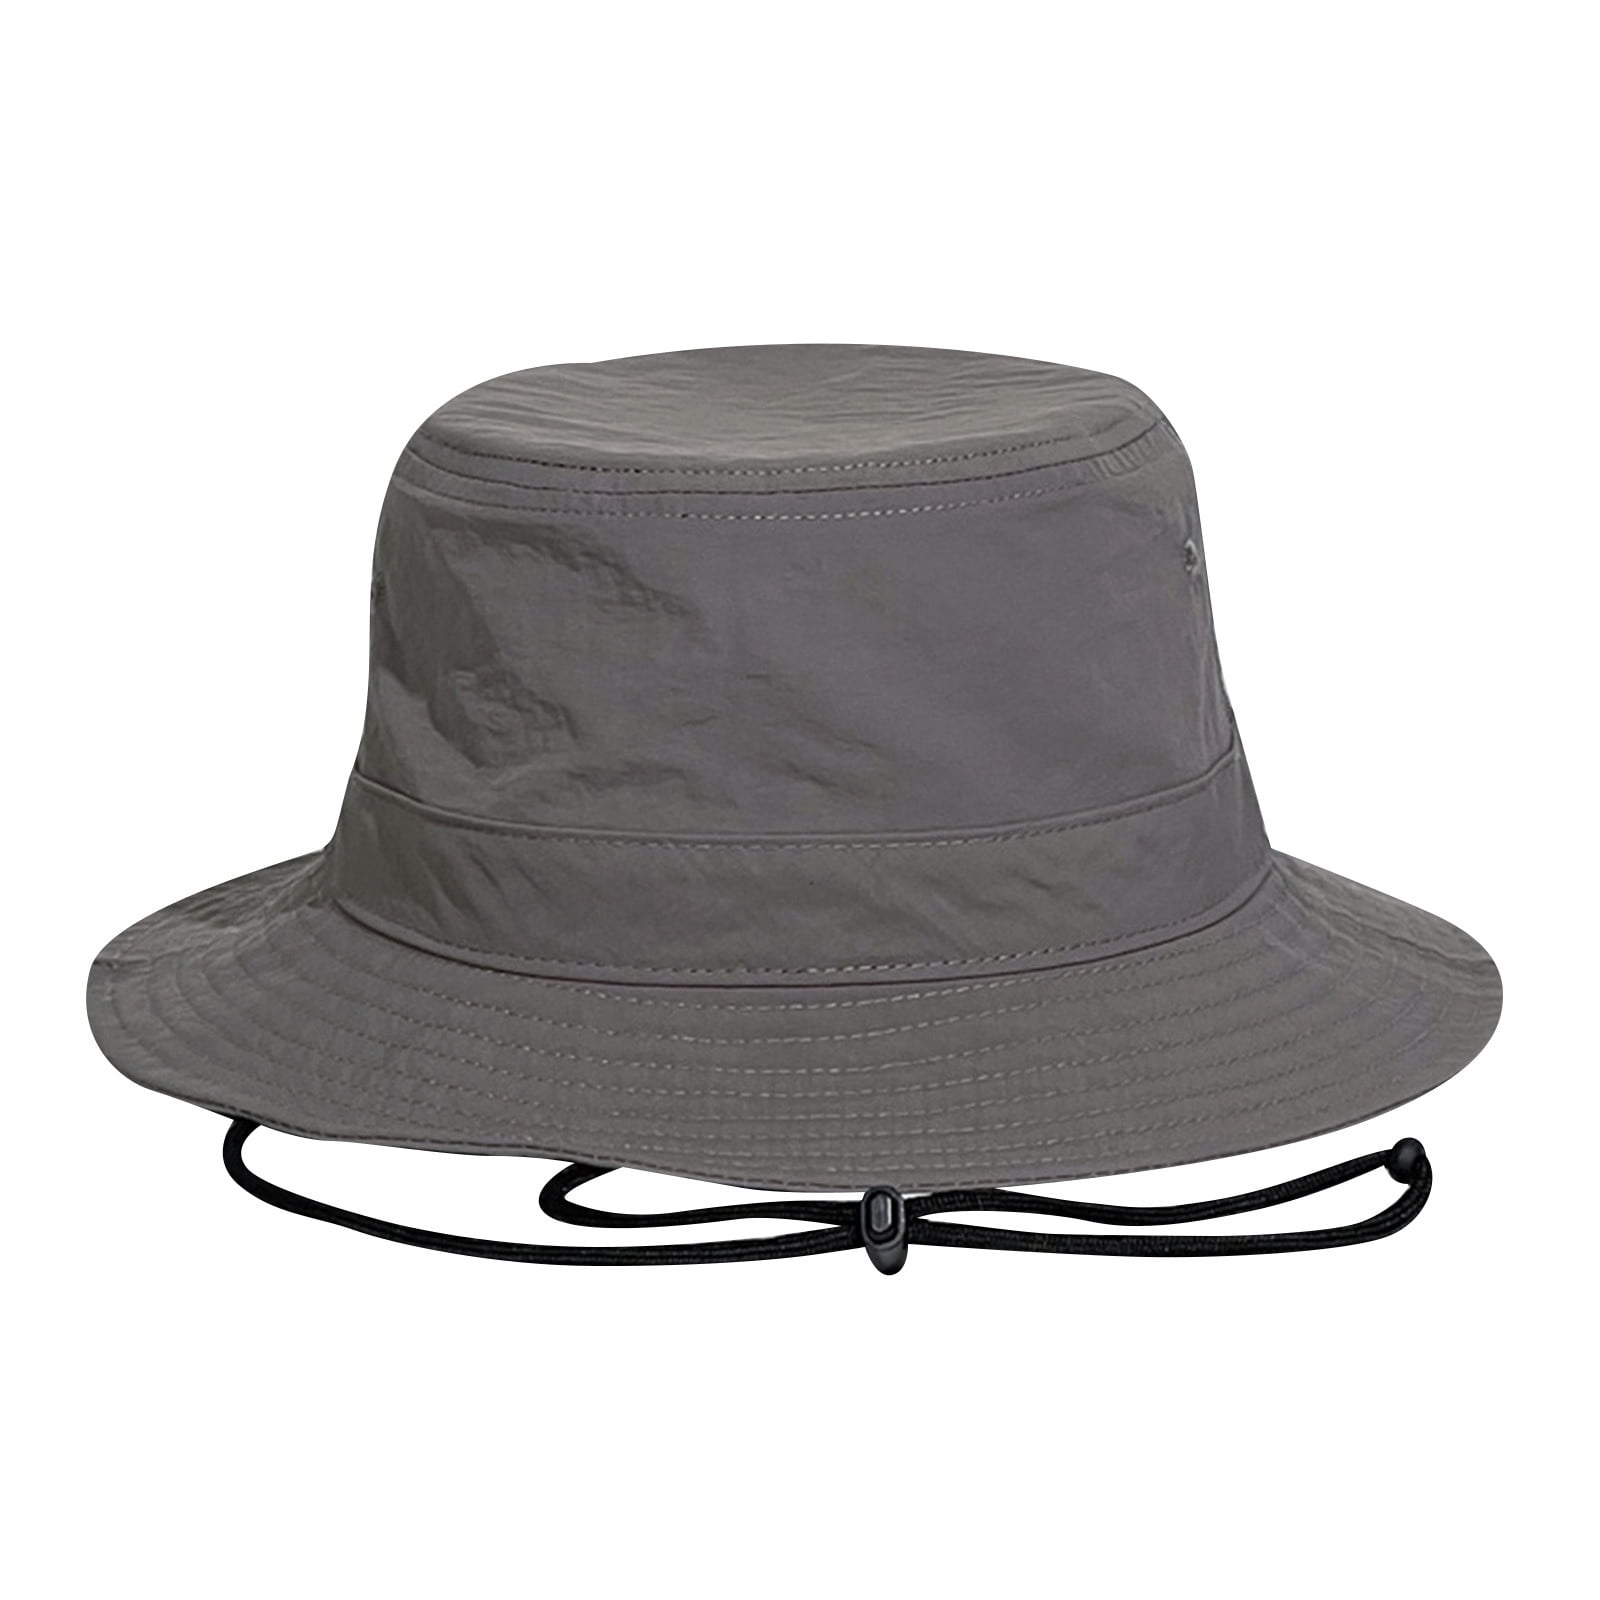 GWAABD Packable Beach Hat Mens and Womens Summer Leisure Outdoor